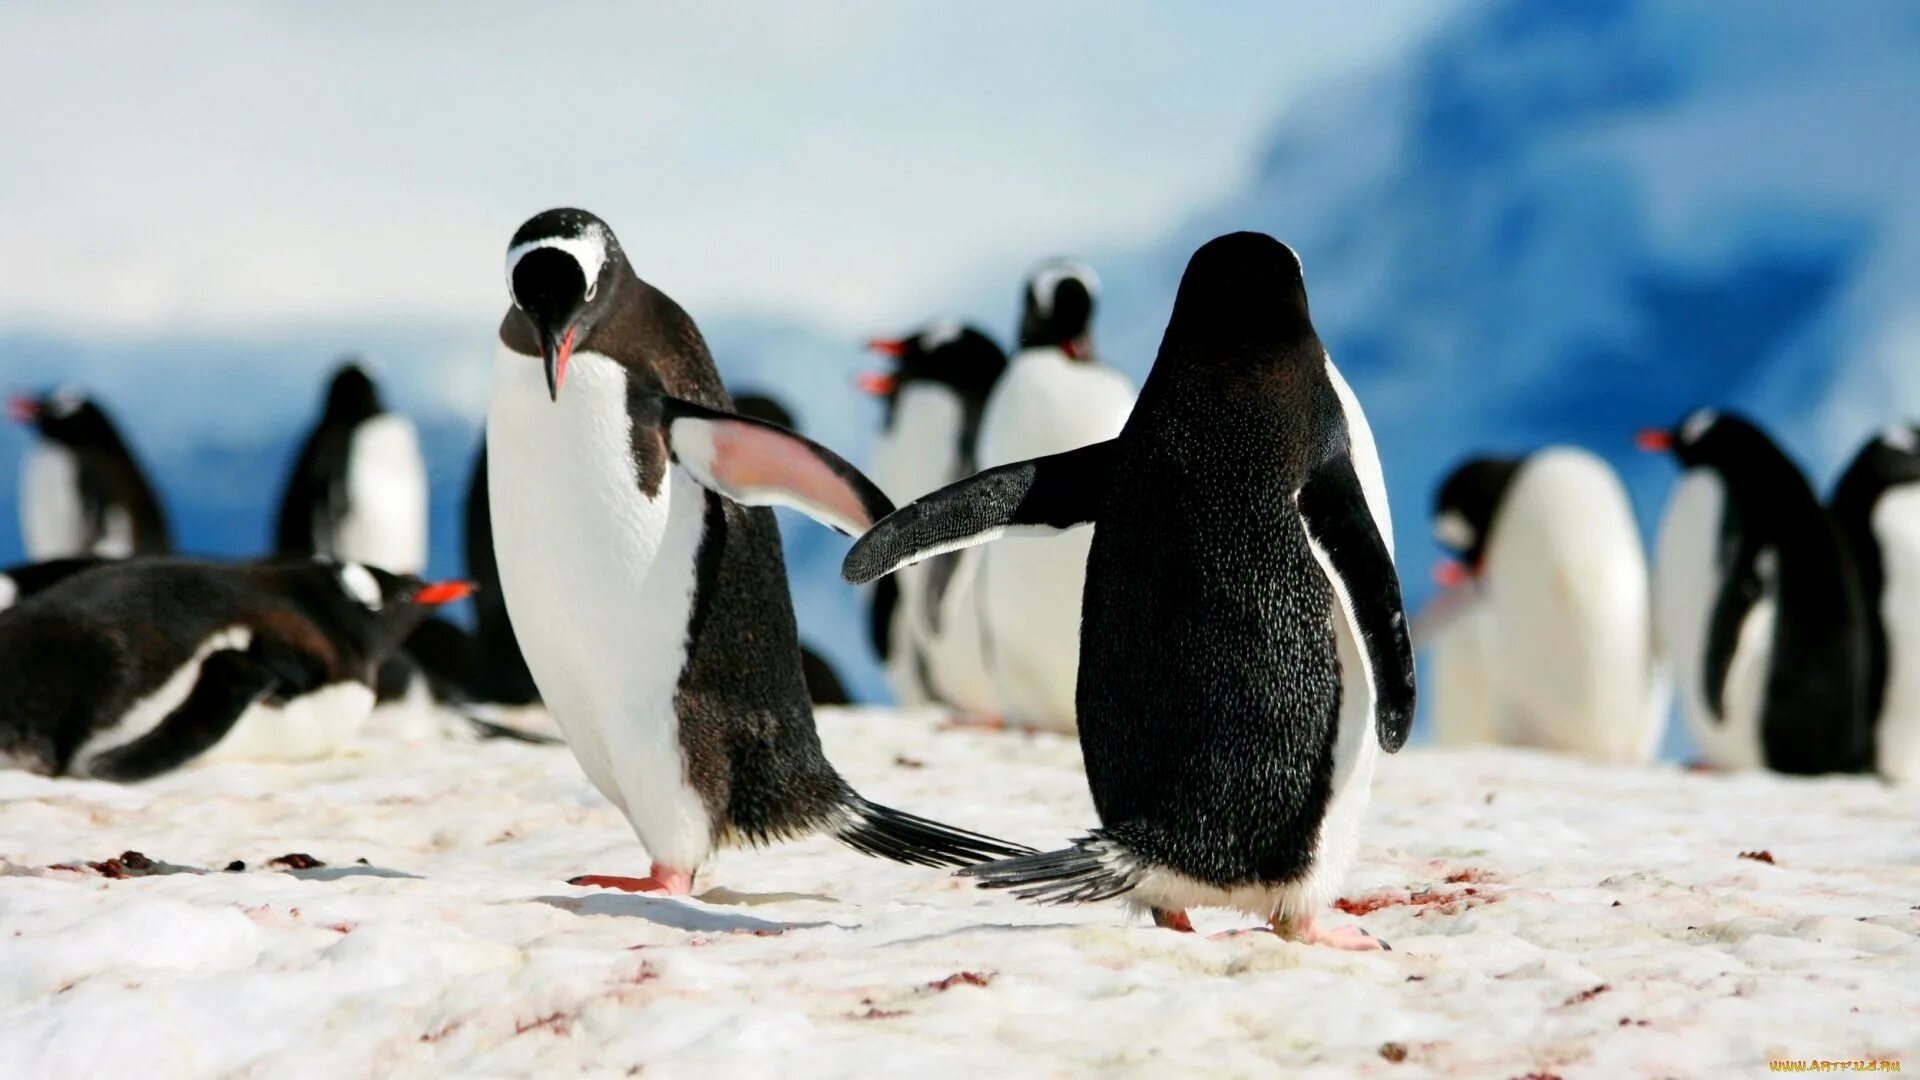 Патагонский Пингвин. Антарктический Пингвин. Необычные пингвины. Пингвины в реальной жизни.